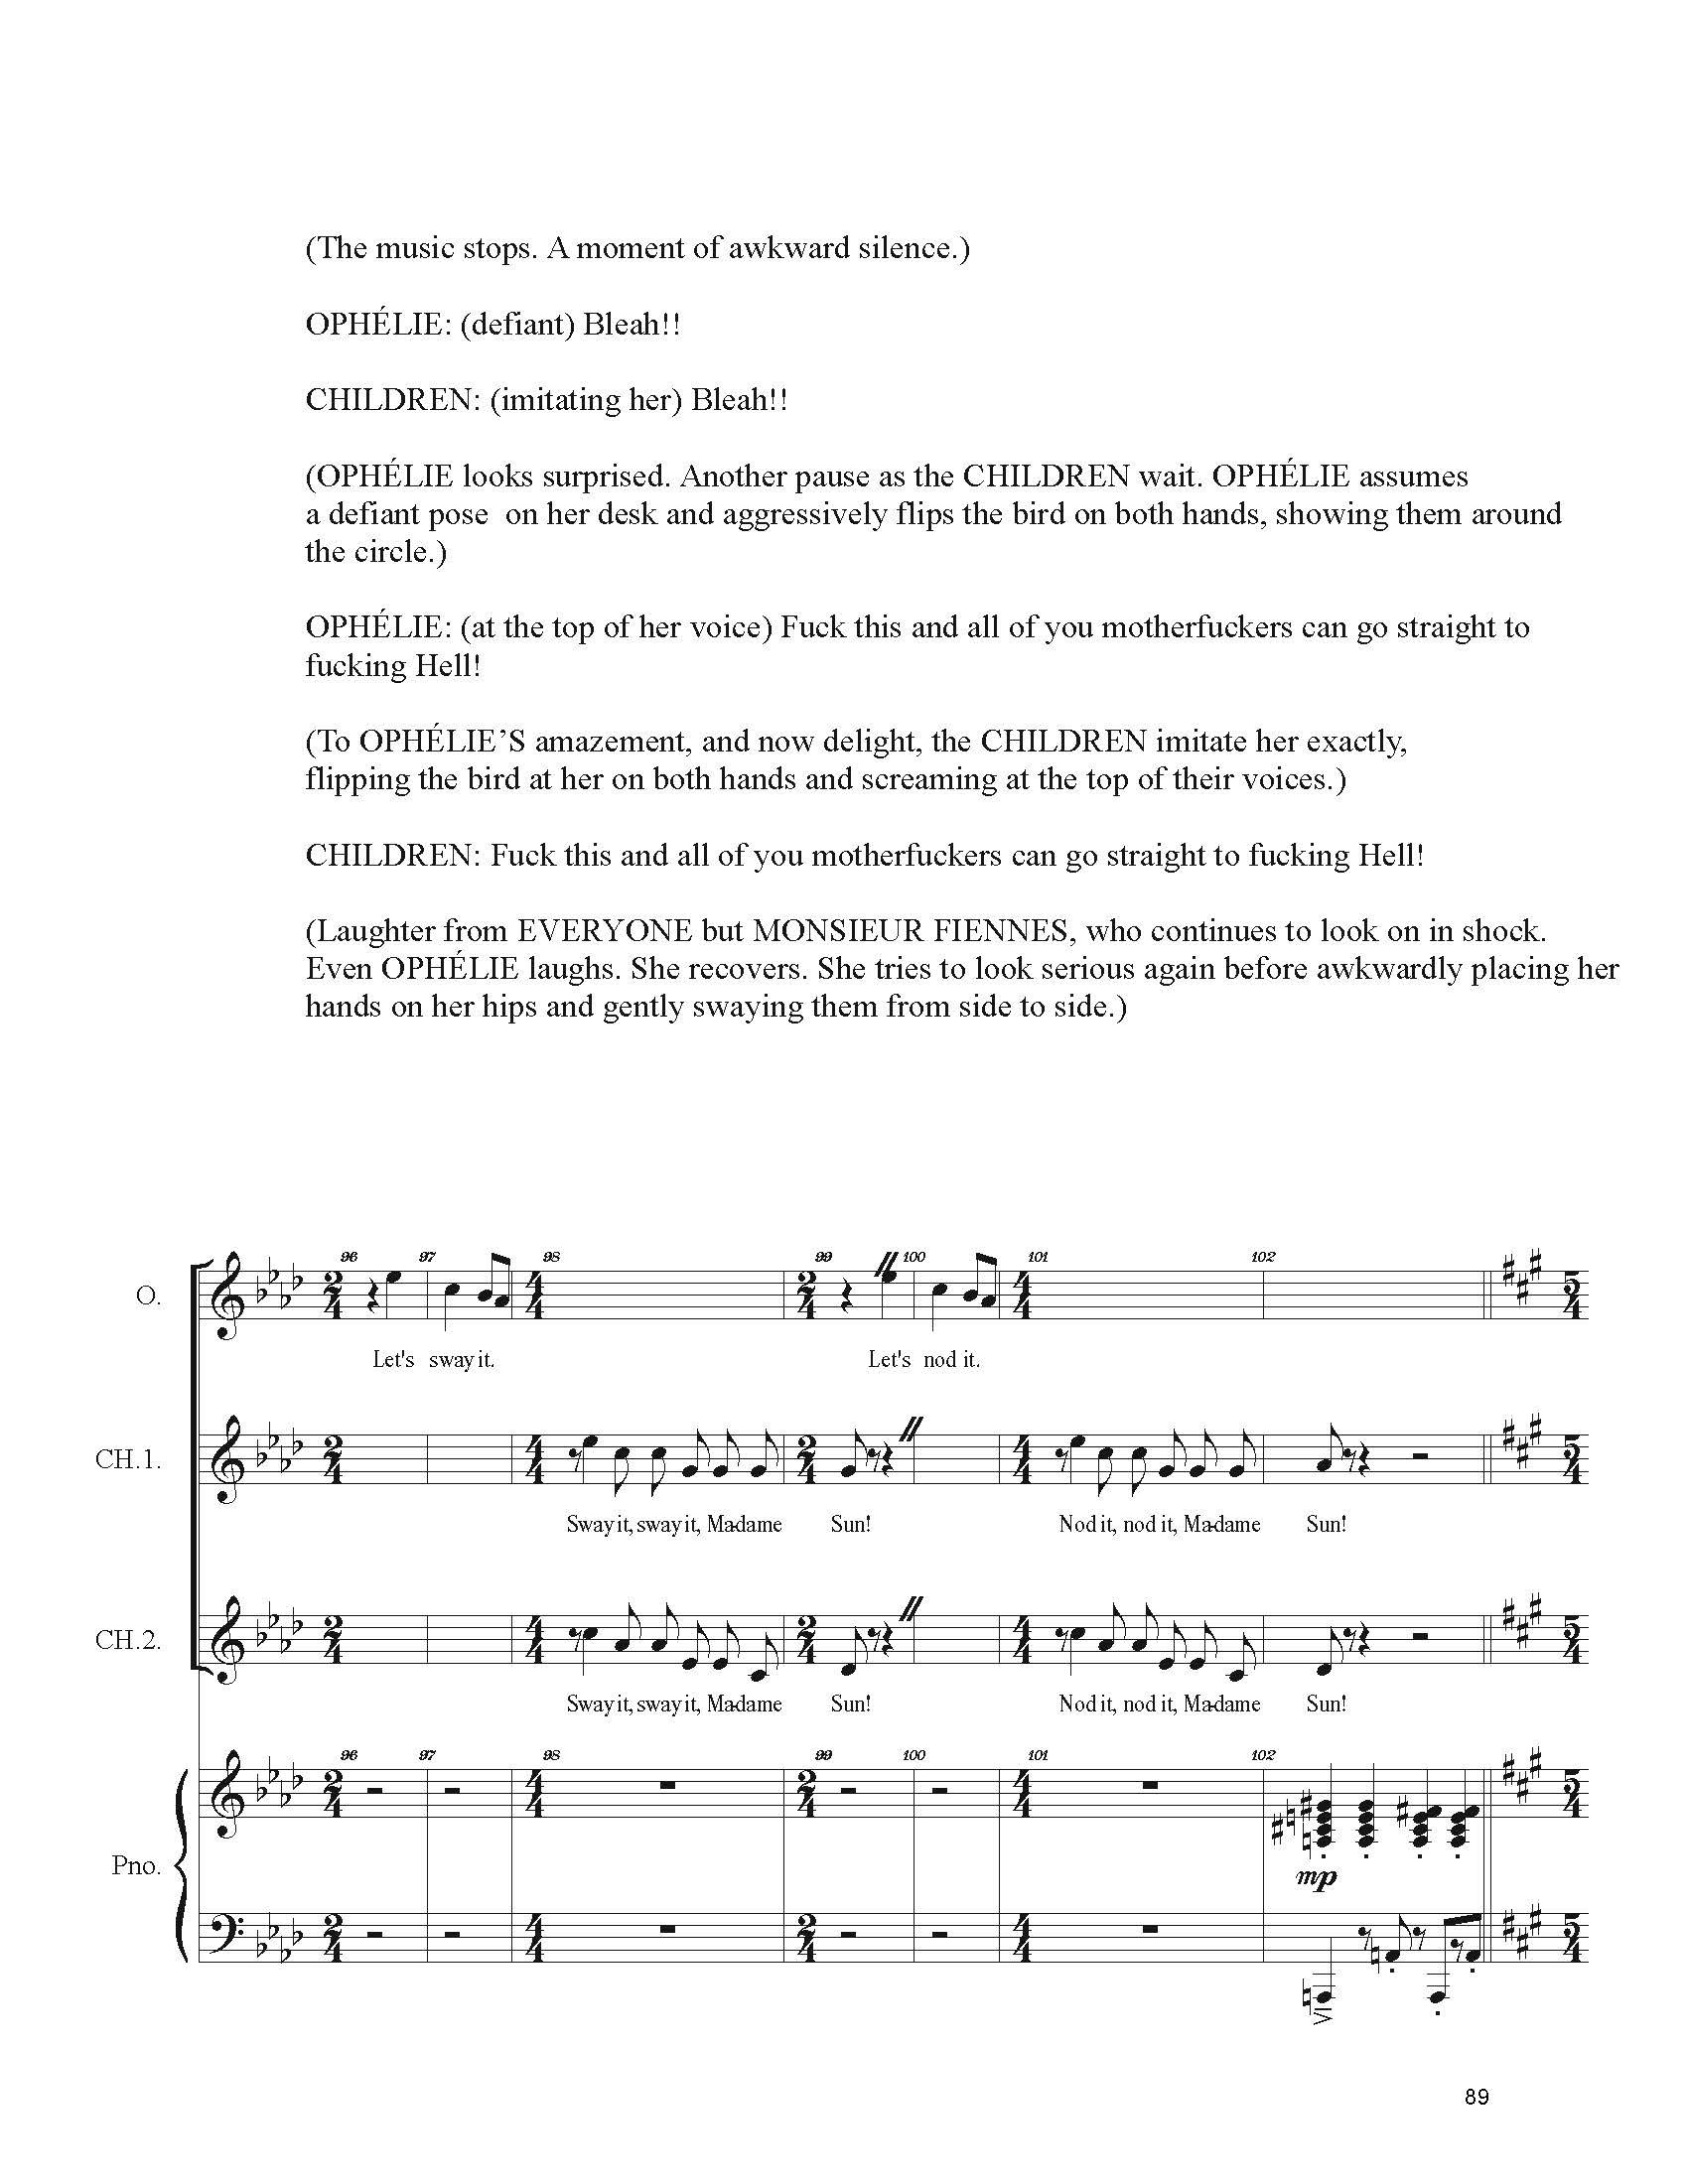 FULL PIANO VOCAL SCORE DRAFT 1 - Score_Page_089.jpg